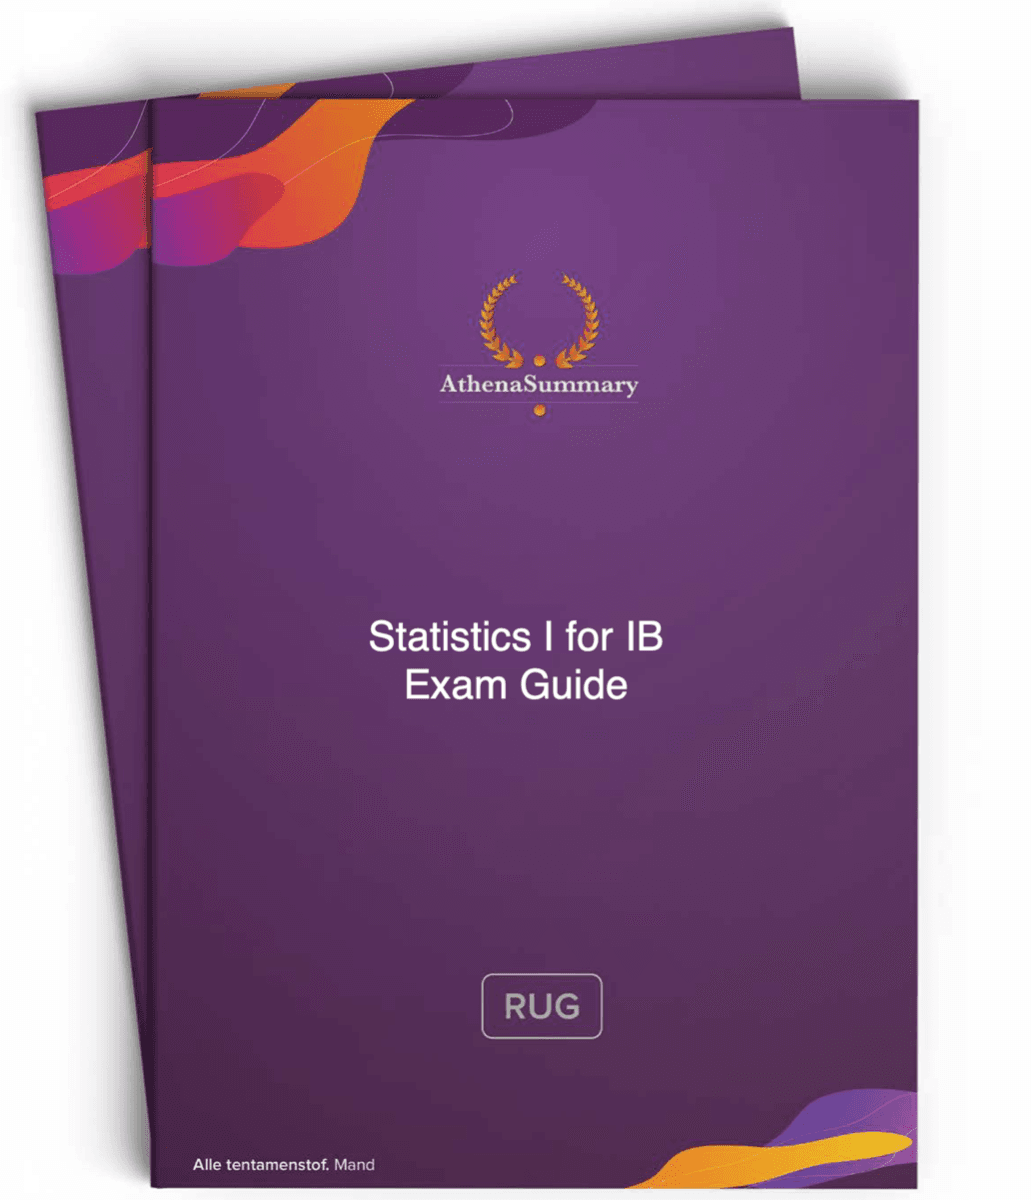 Exam Guide - Statistics I for IB